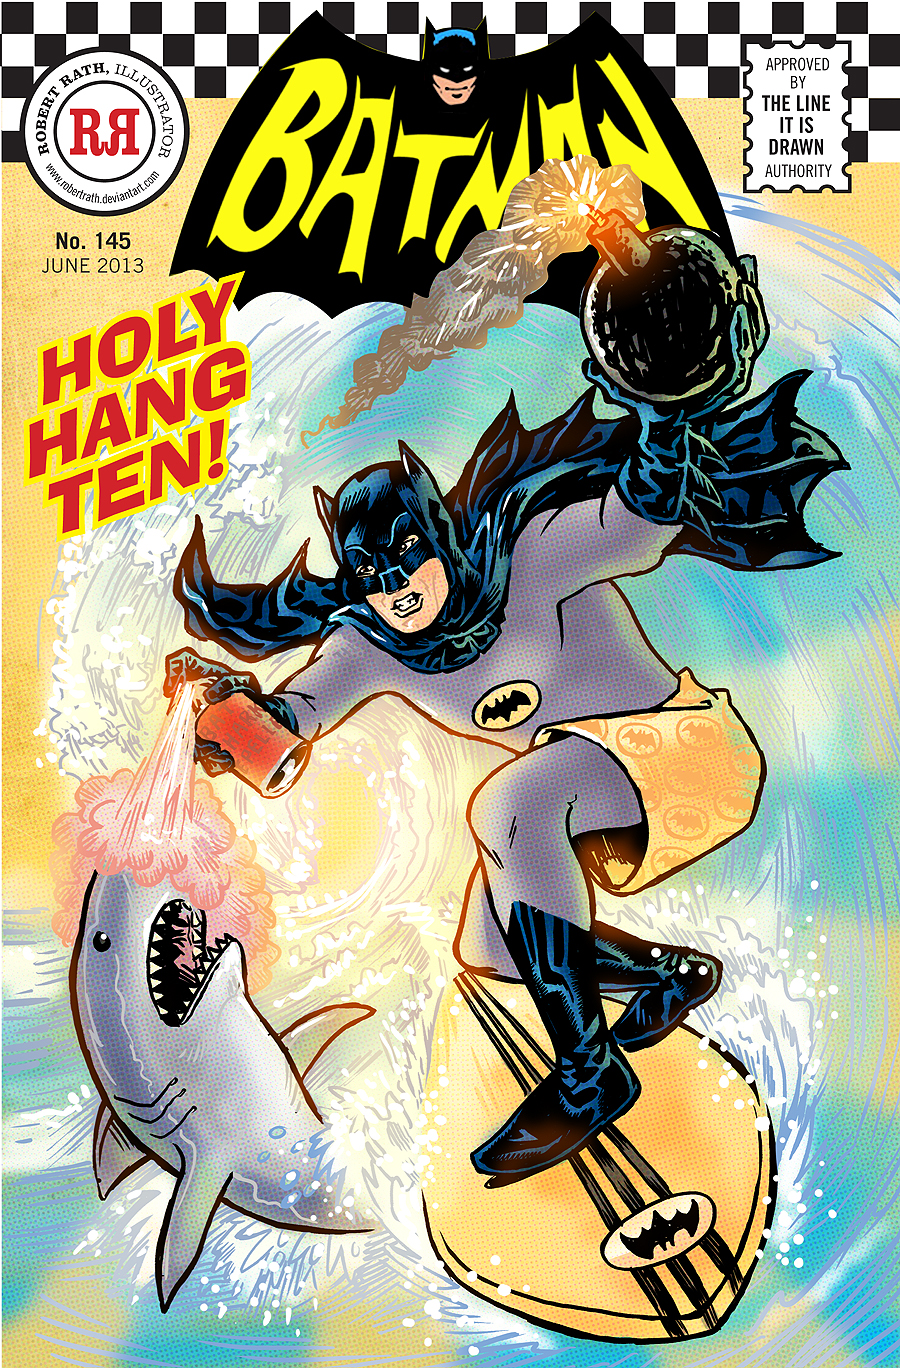 Holy Surf's Up, Batman!